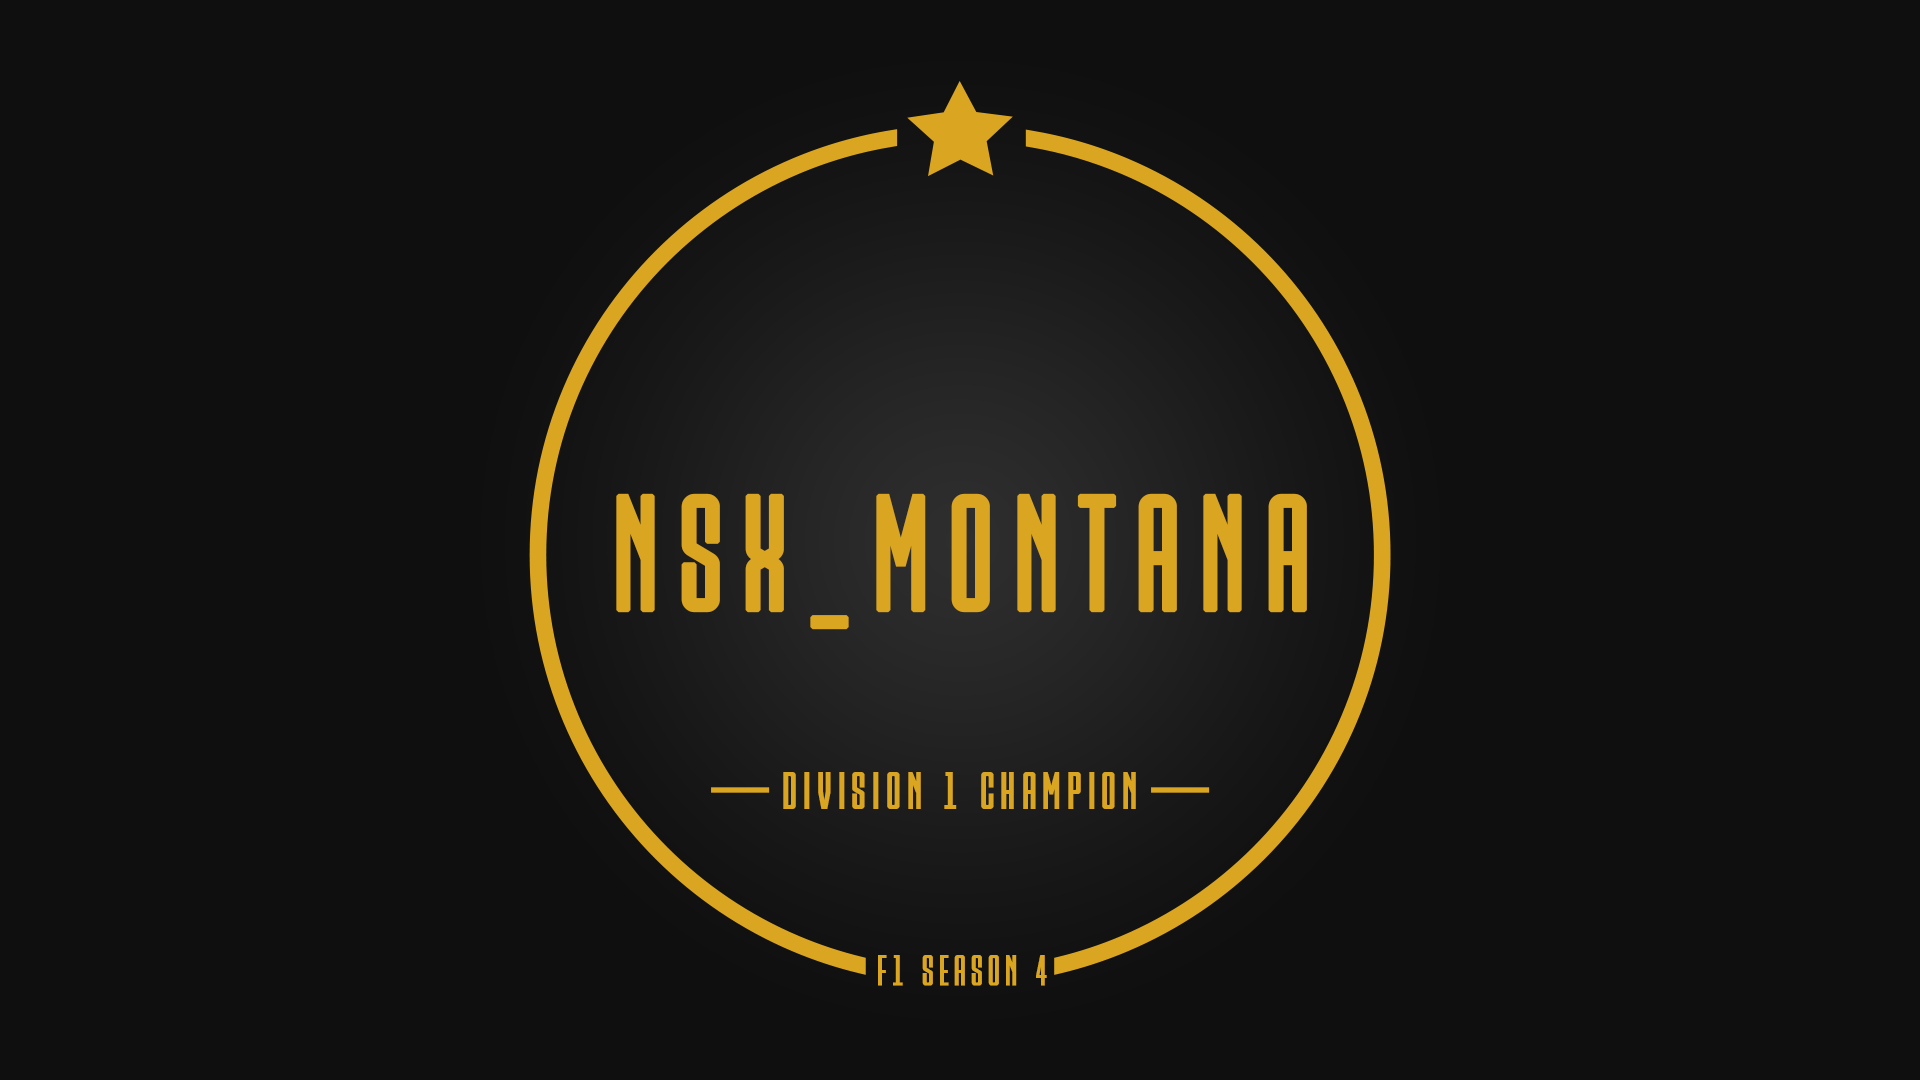 Division 1 Champion - NSX_Montana